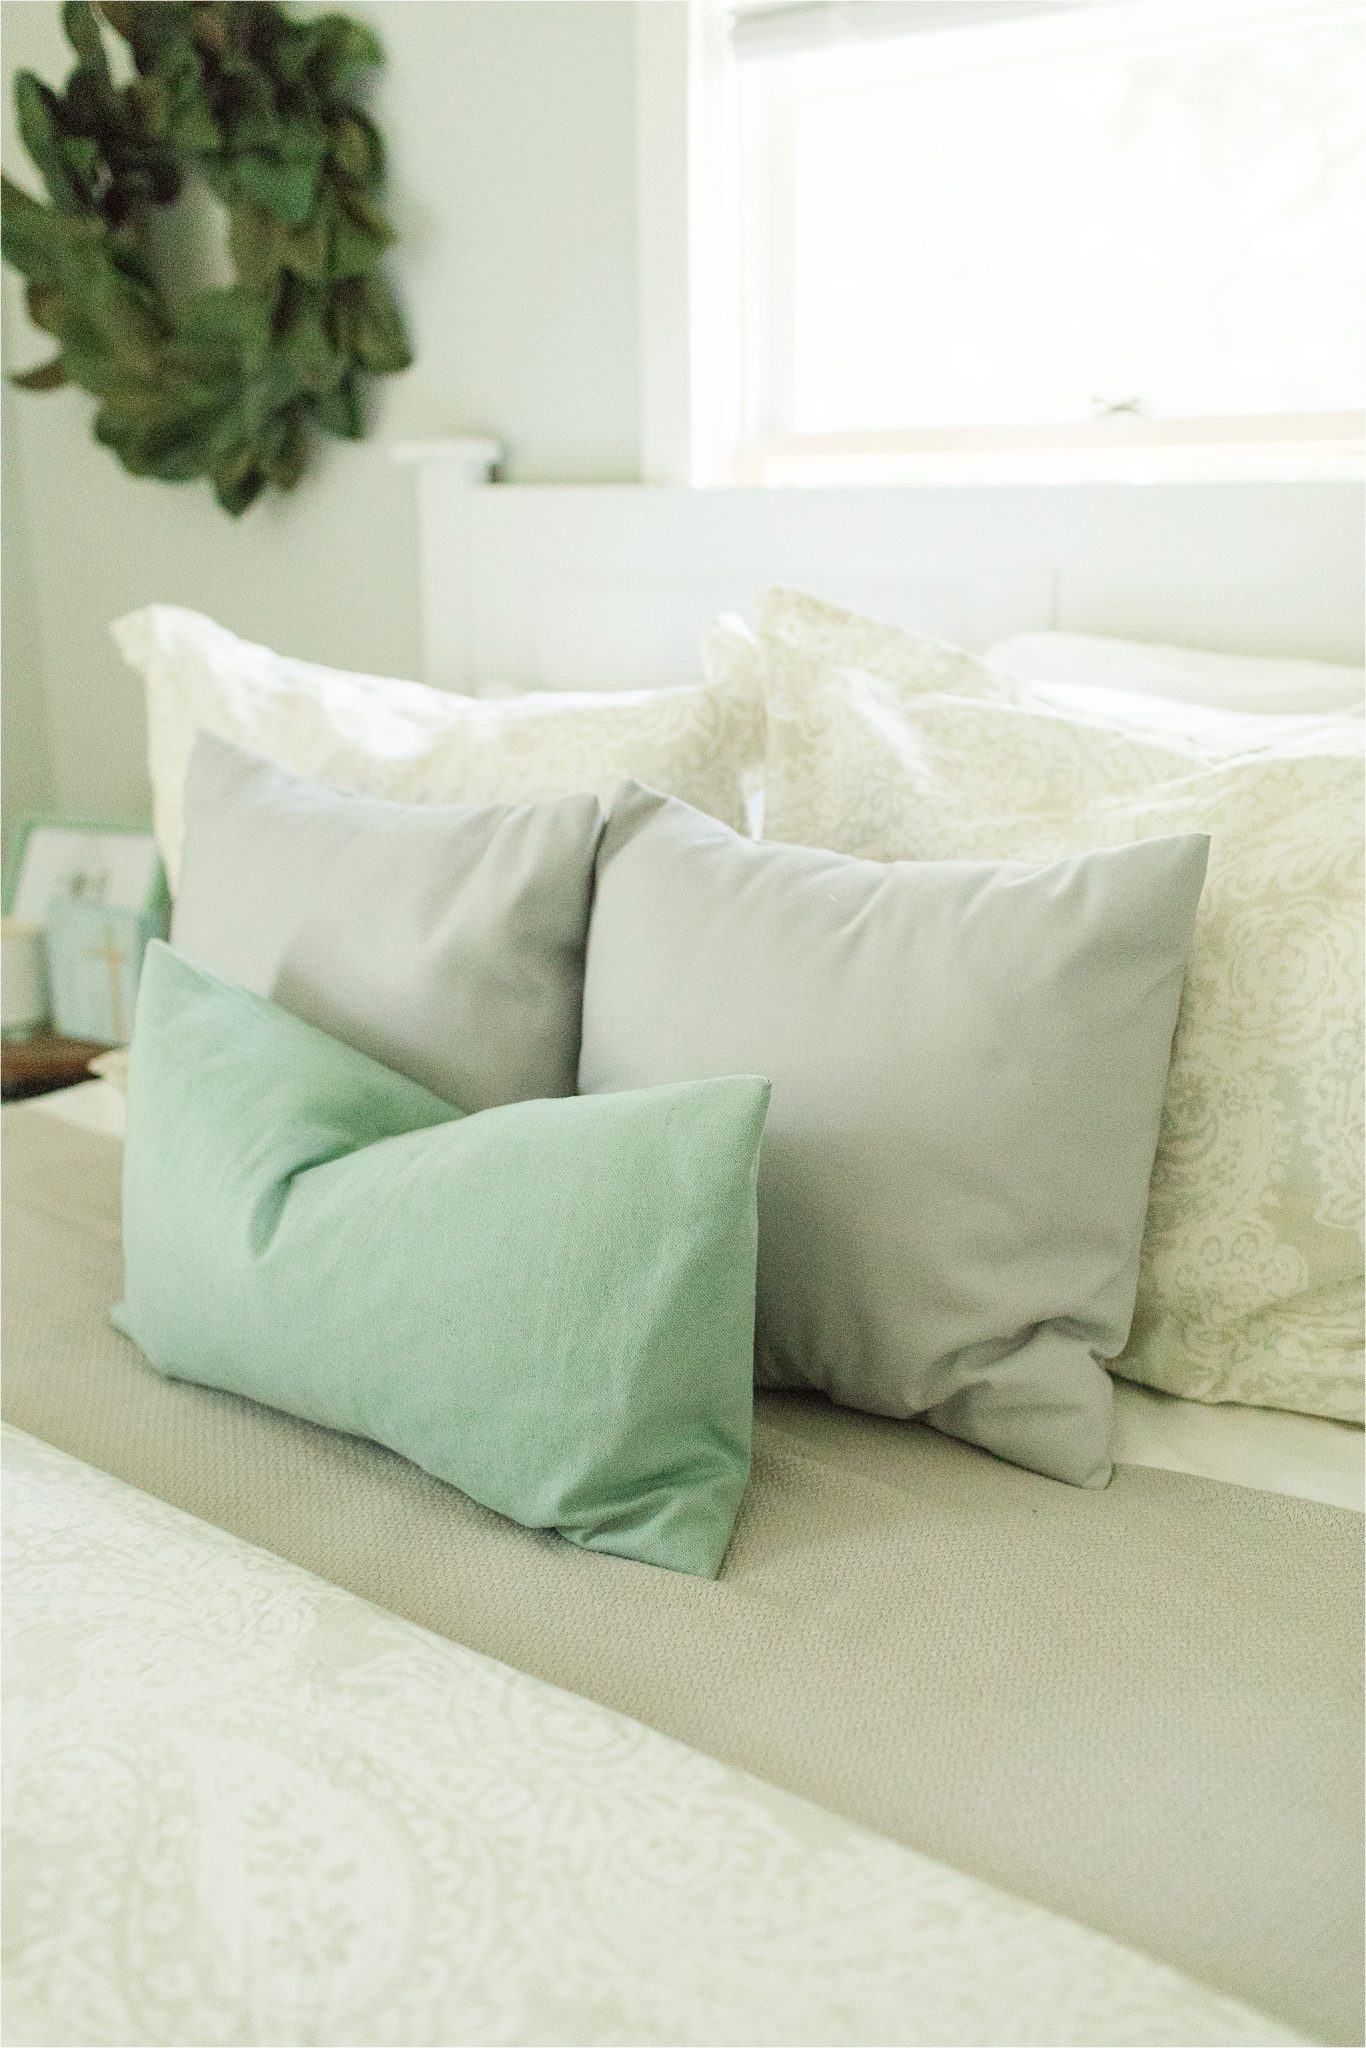 throw pillows and bedding midtown mobile